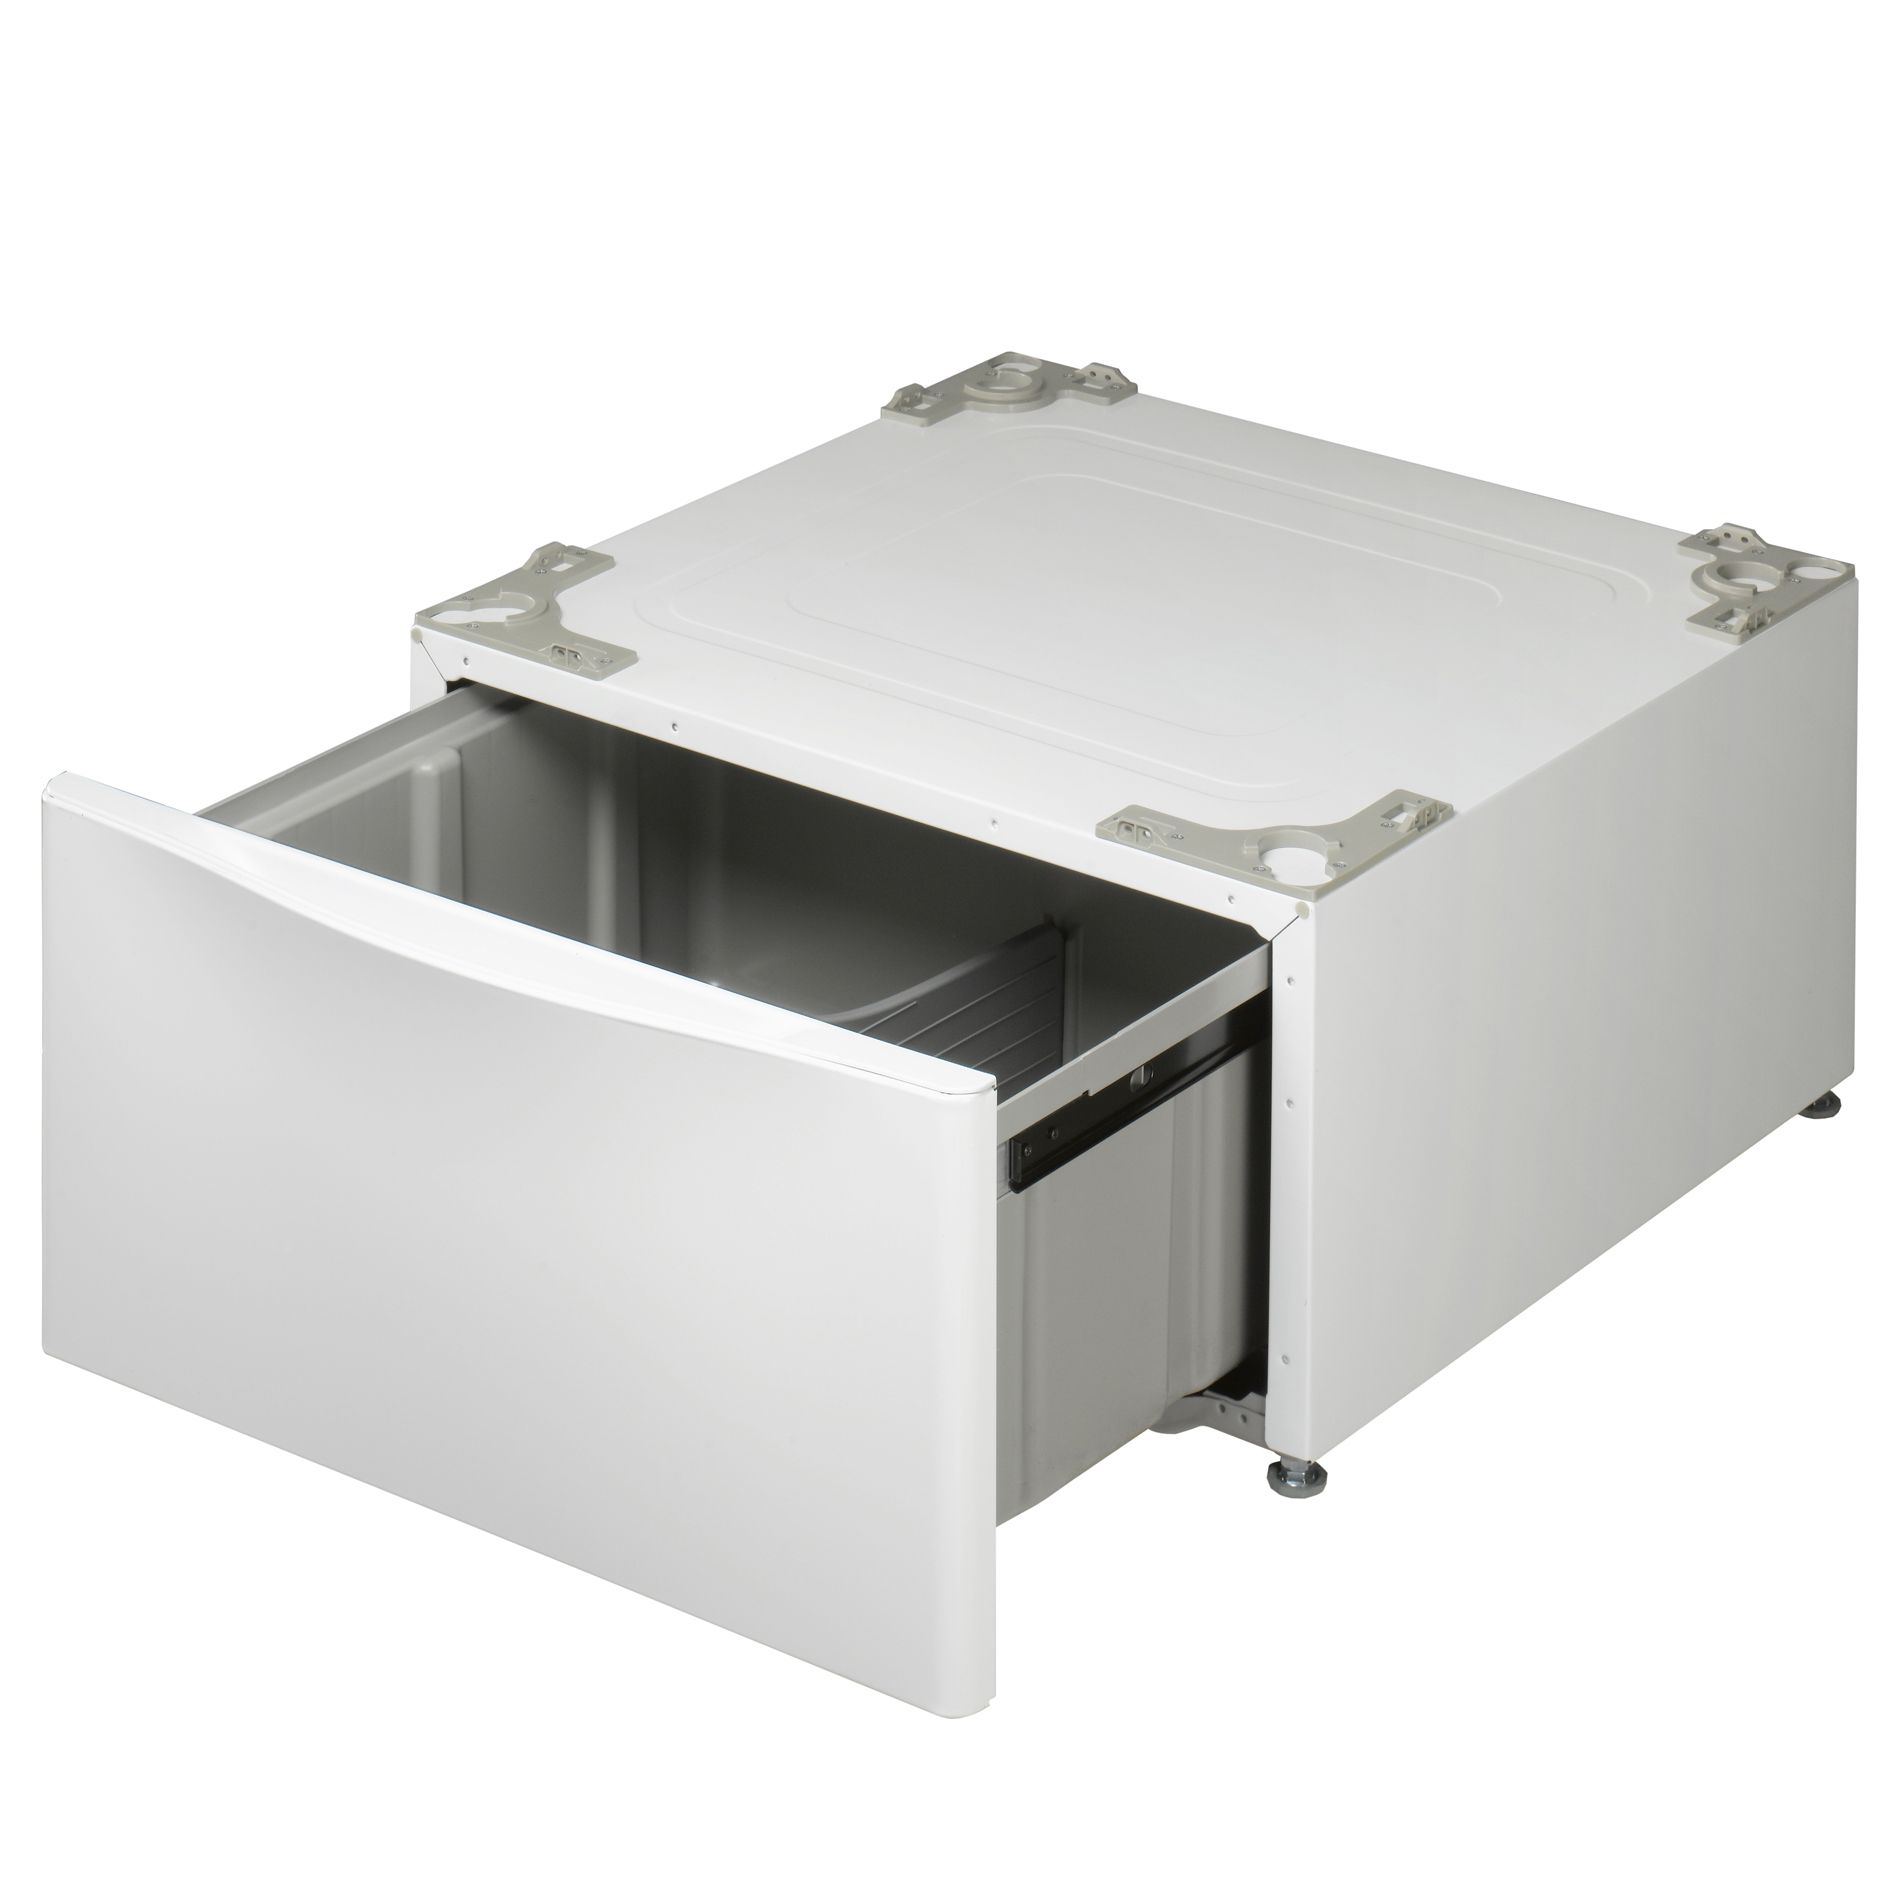 LG WDP4W  13.6" Laundry Pedestal with Storage Drawer - White